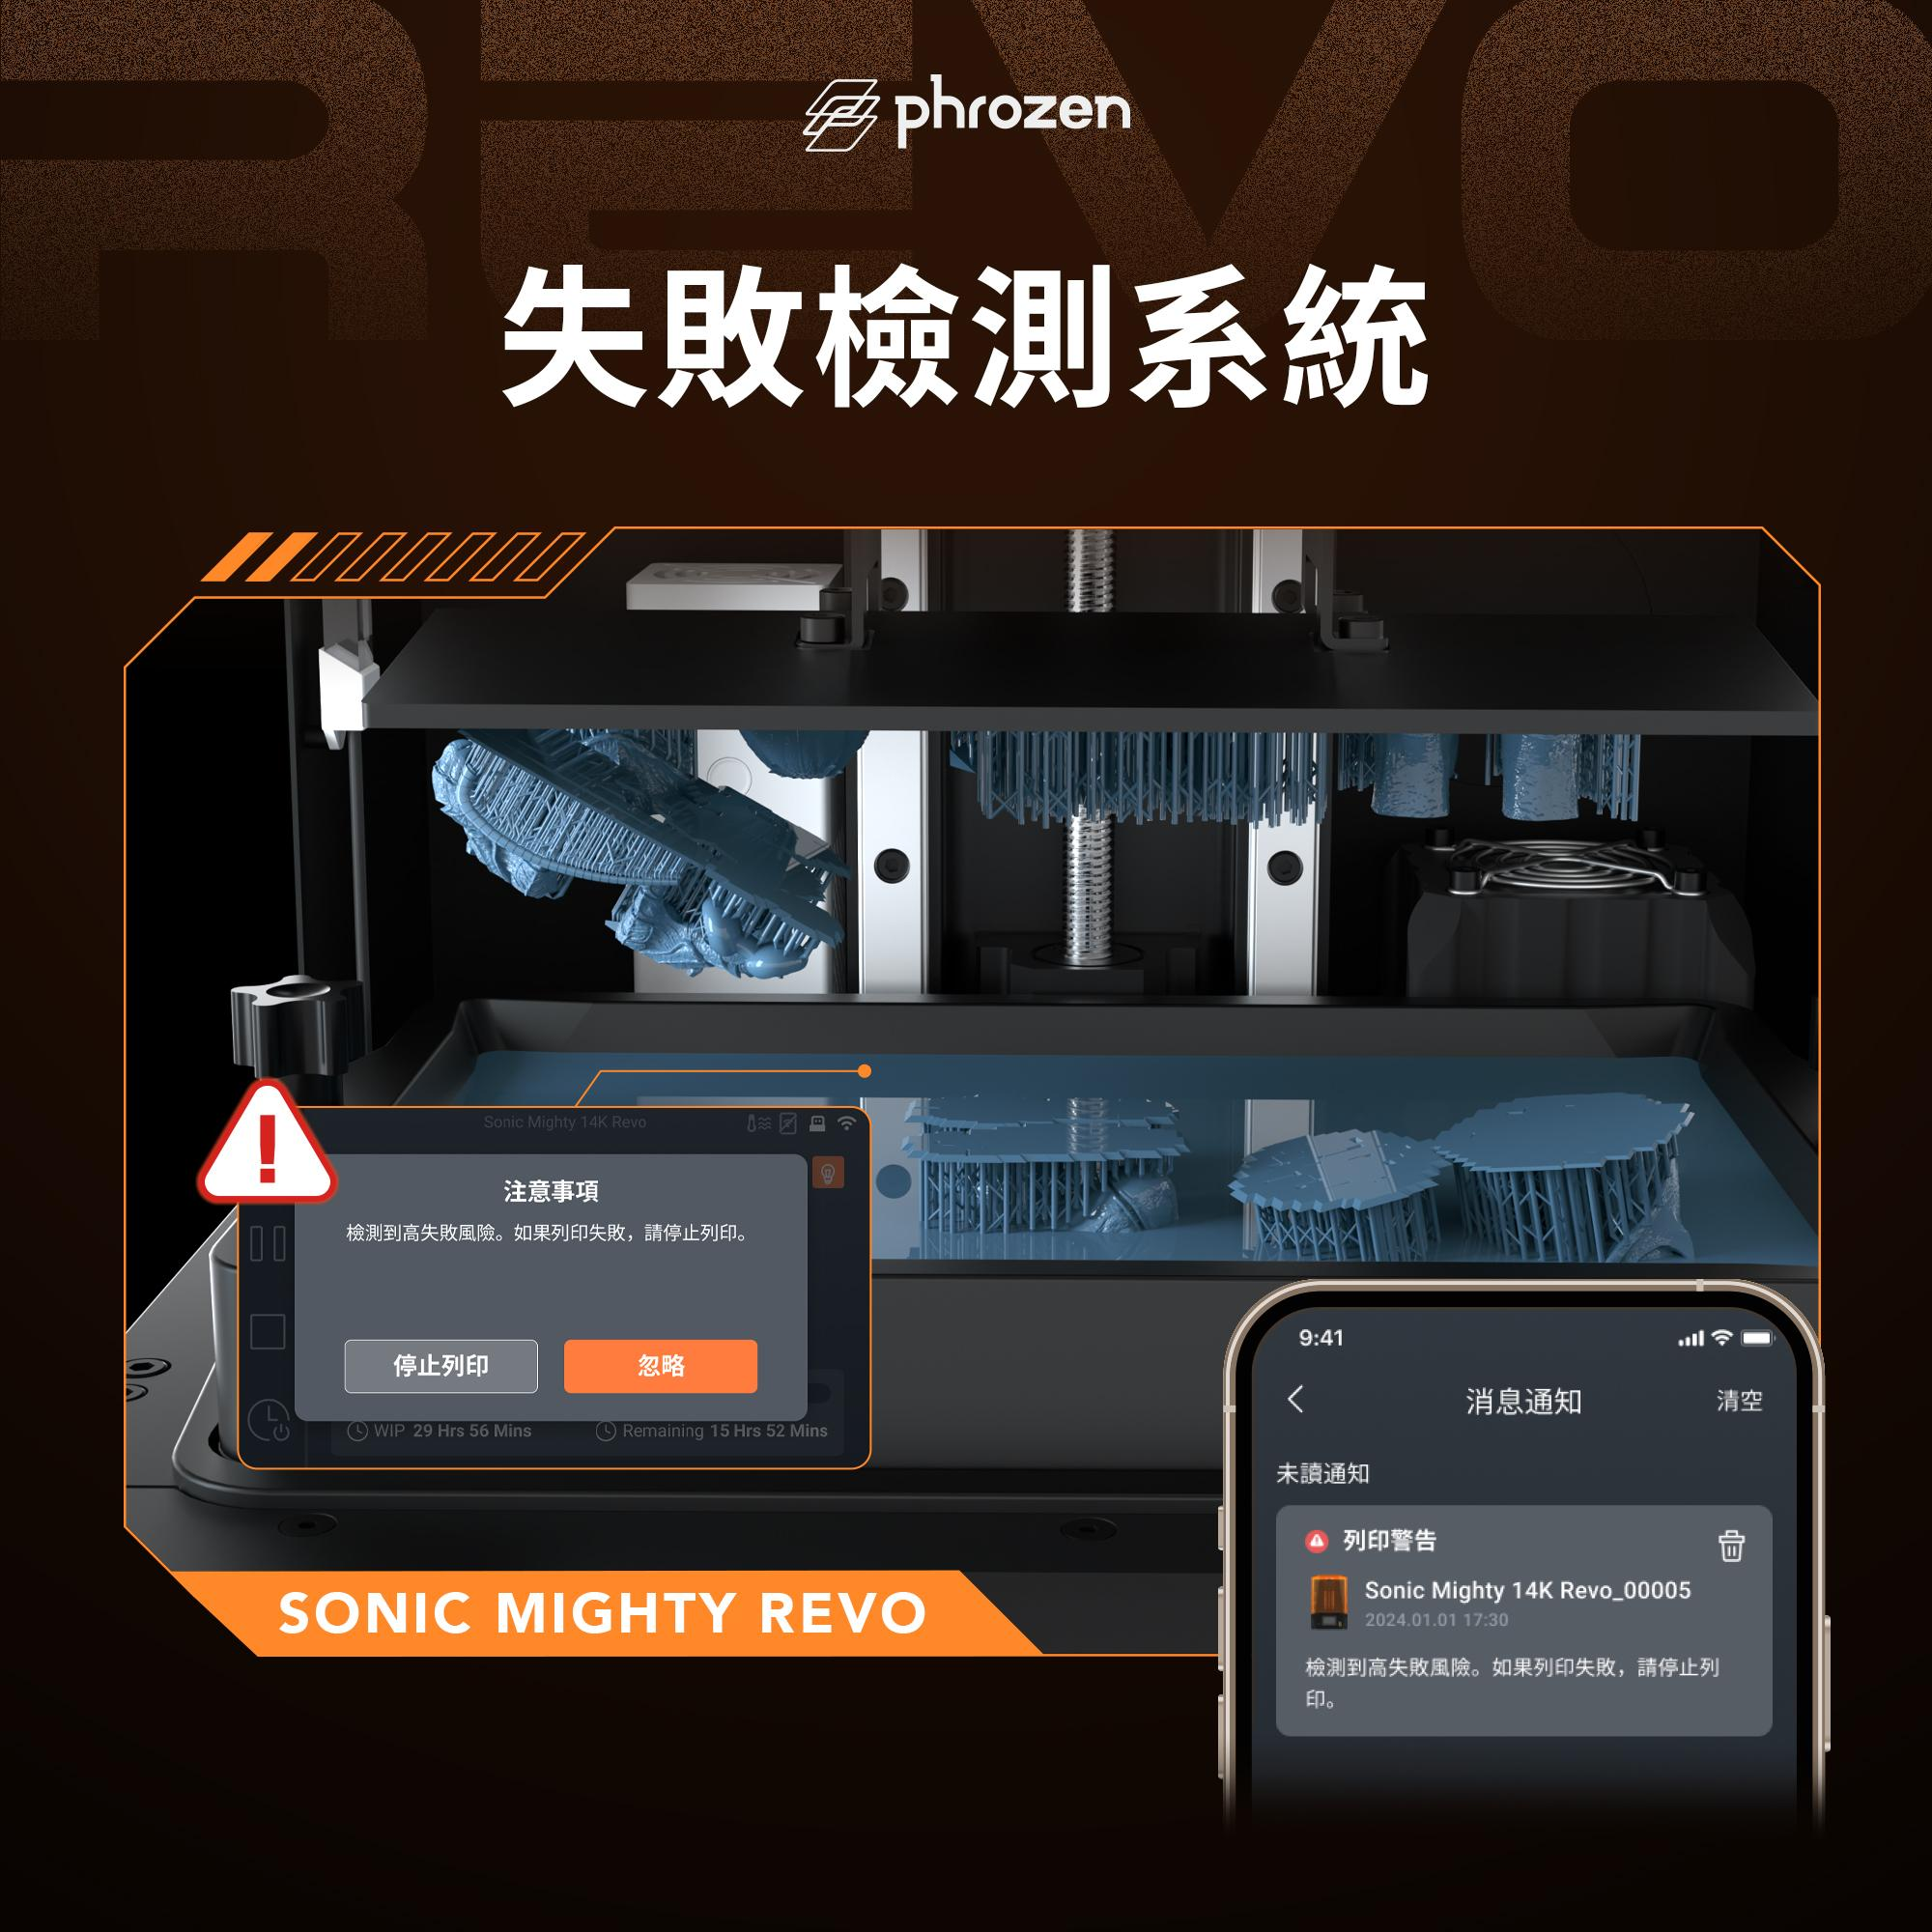 【REVO】Sonic Mighty Revo 工程打樣組合，機器+1瓶剛性PC/GF LIKE樹脂